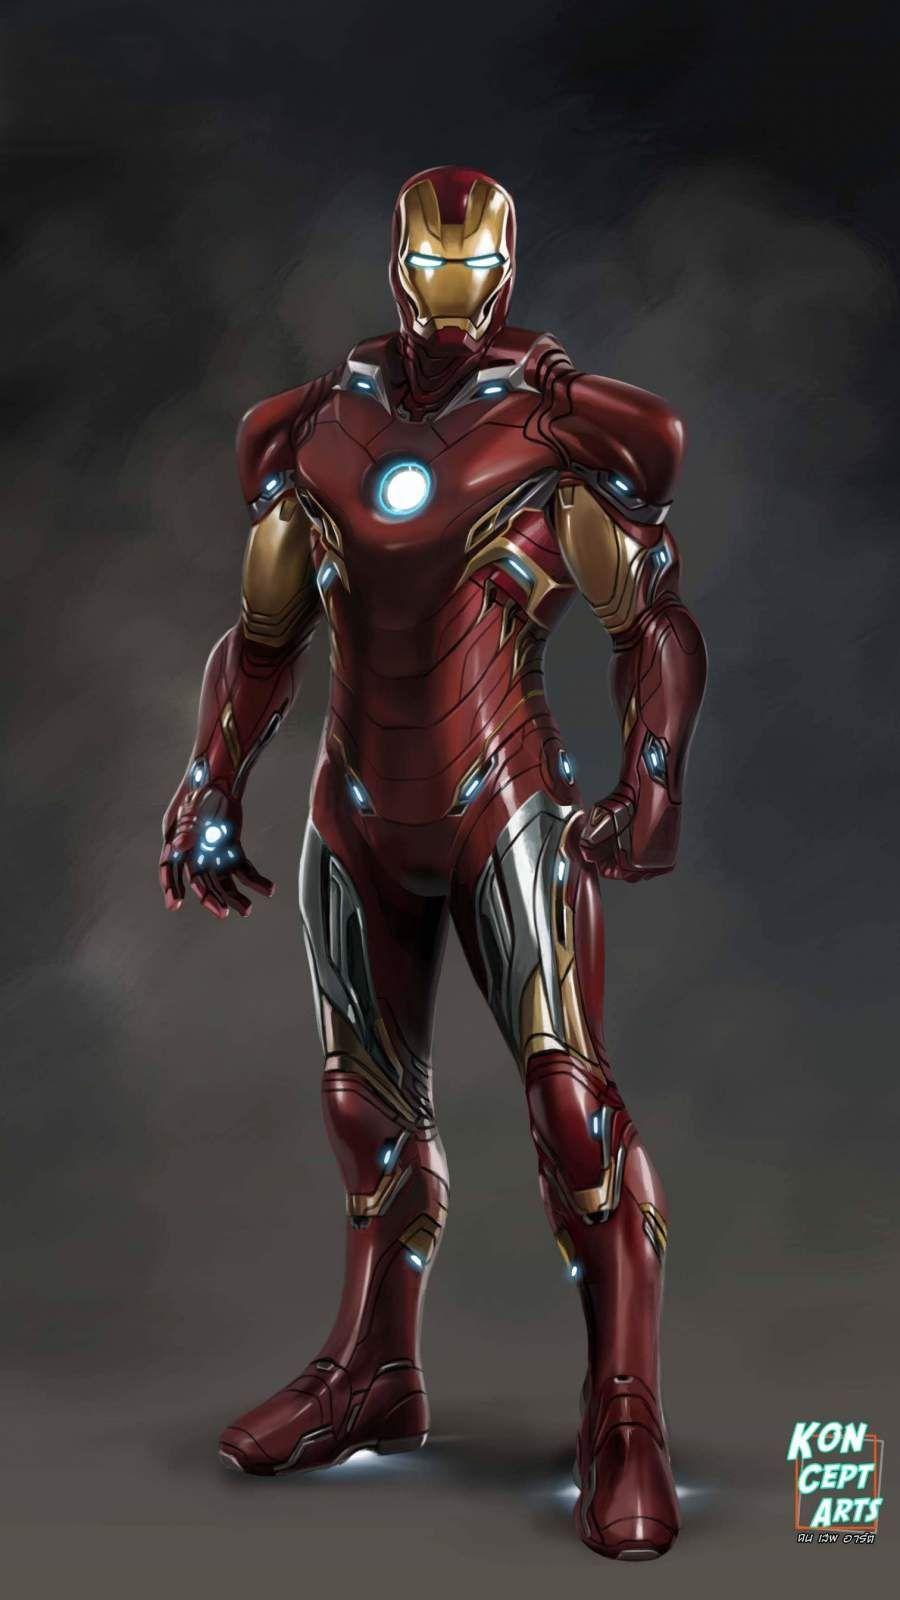 The Iron Man MK 85 Armor iPhone Wallpaper. Iron man